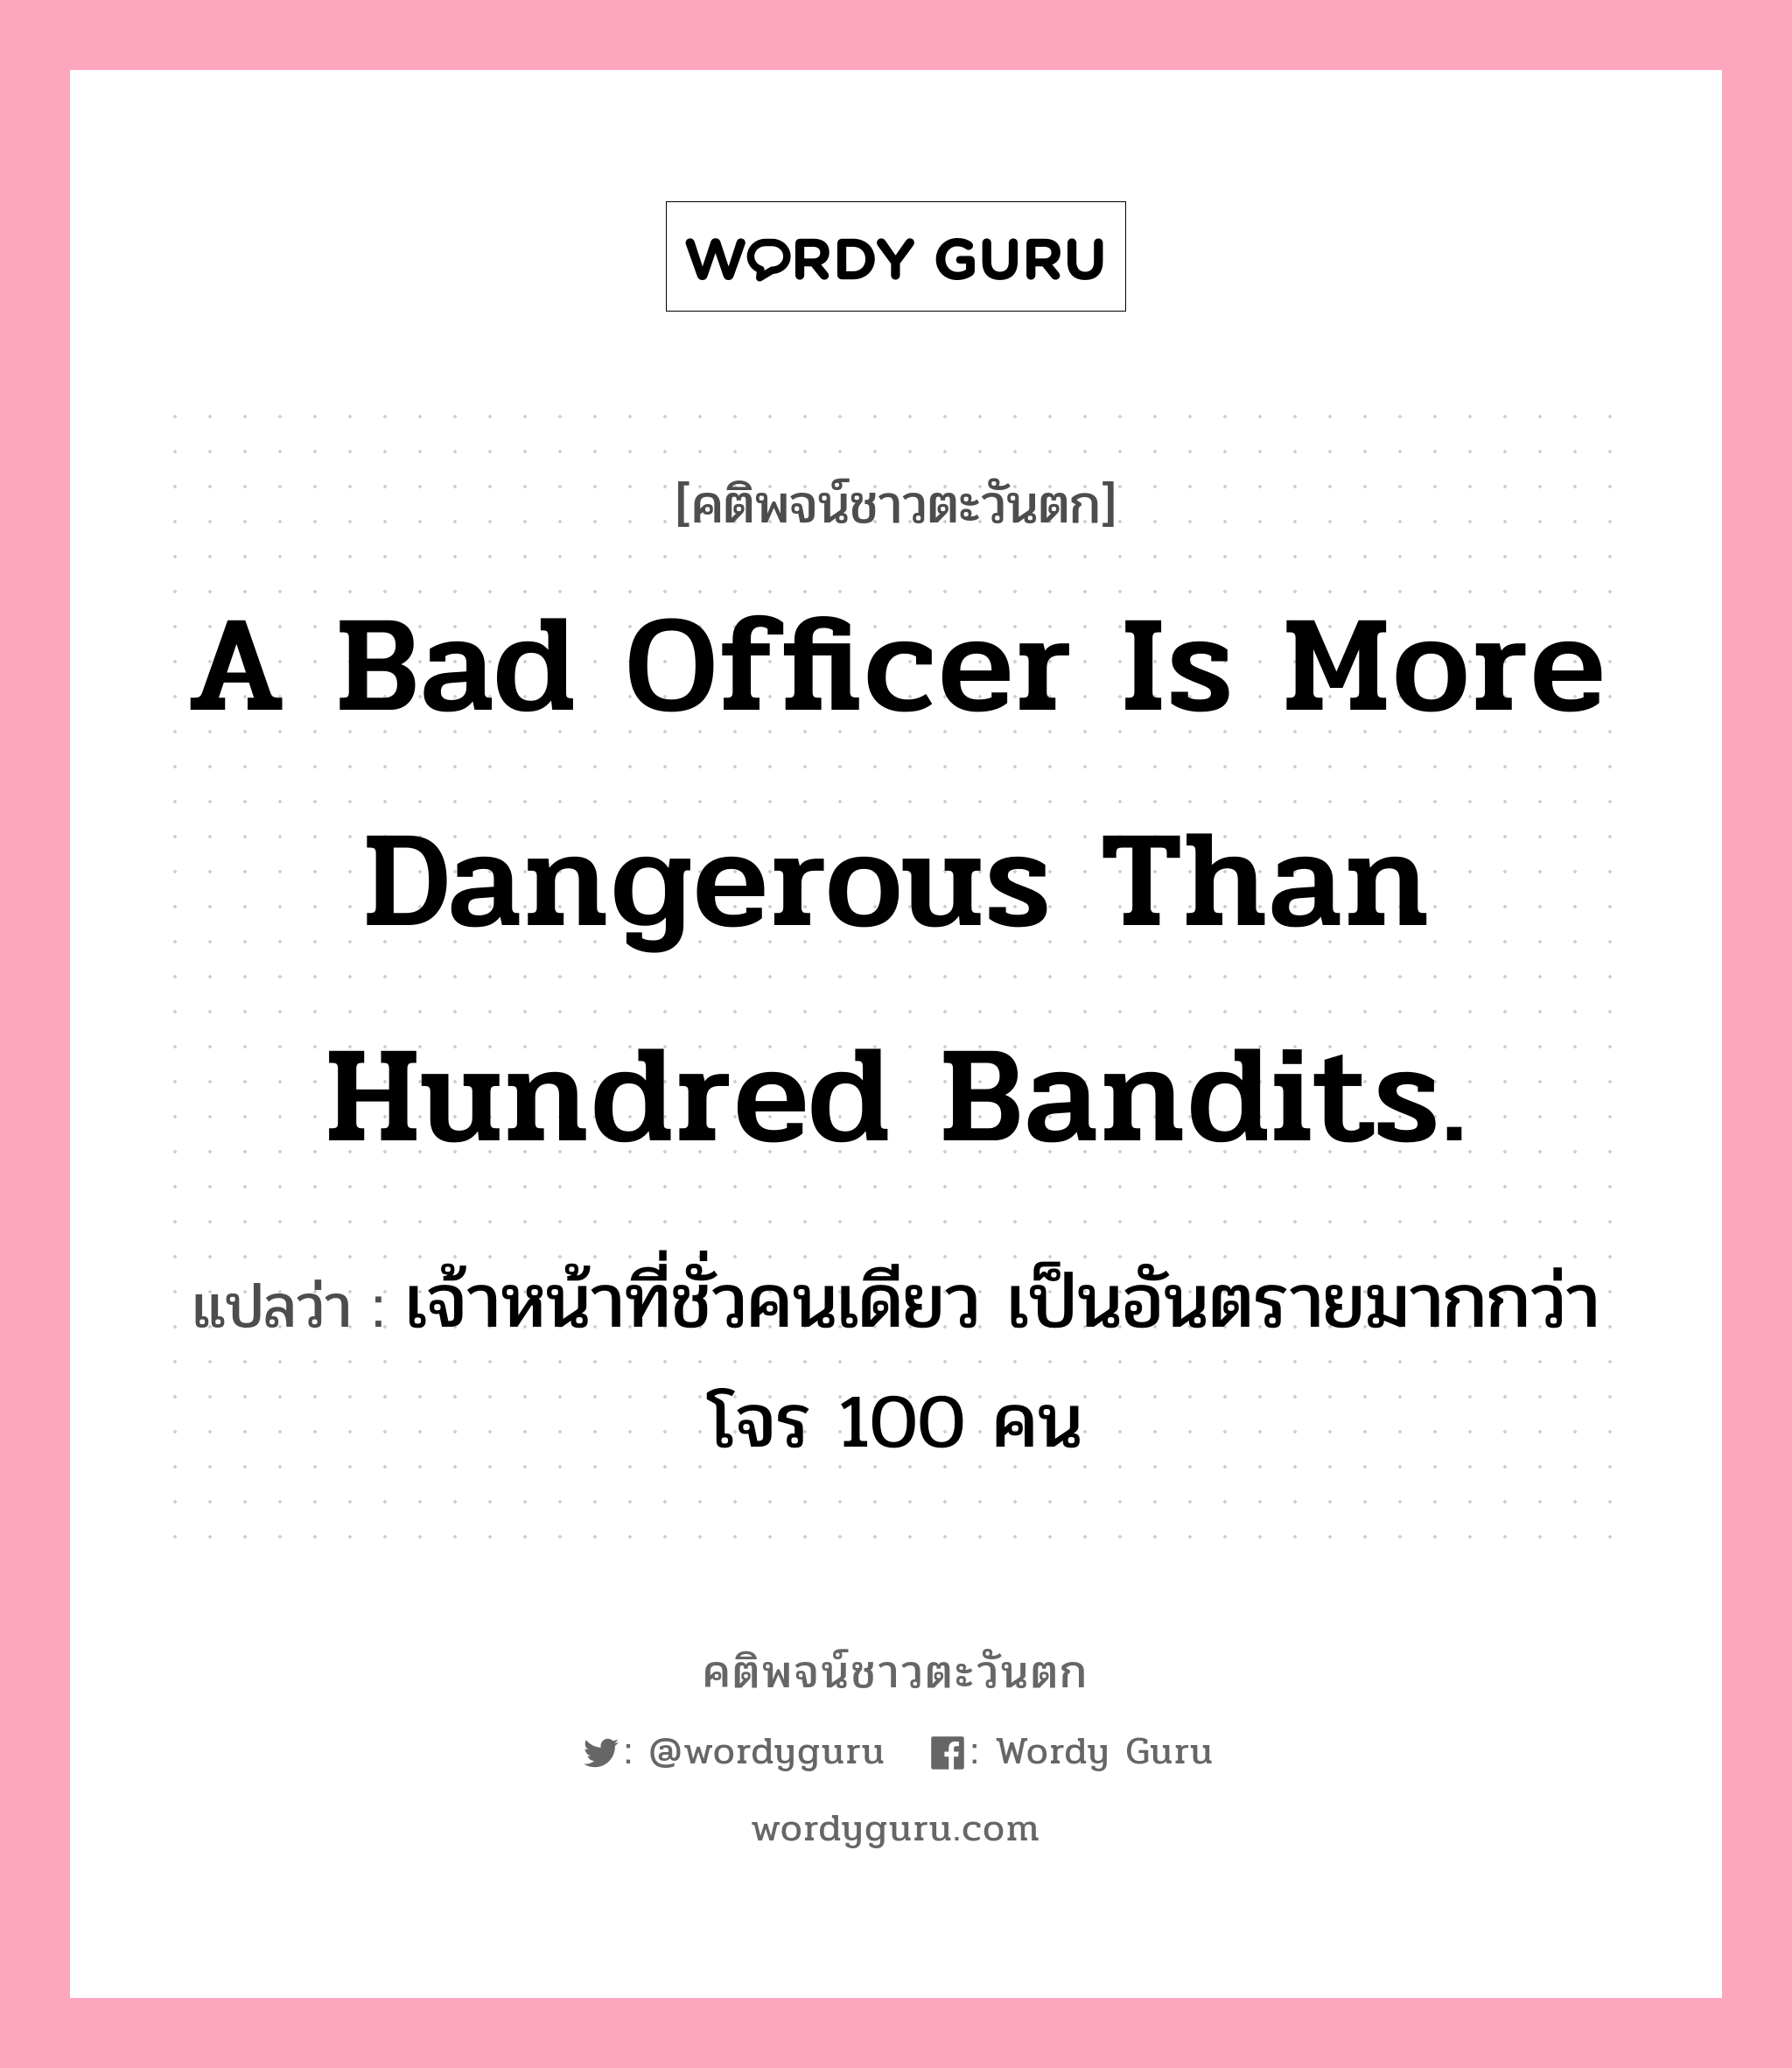 A bad officer is more dangerous than hundred bandits., คติพจน์ชาวตะวันตก A bad officer is more dangerous than hundred bandits. แปลว่า เจ้าหน้าที่ชั่วคนเดียว เป็นอันตรายมากกว่าโจร 100 คน